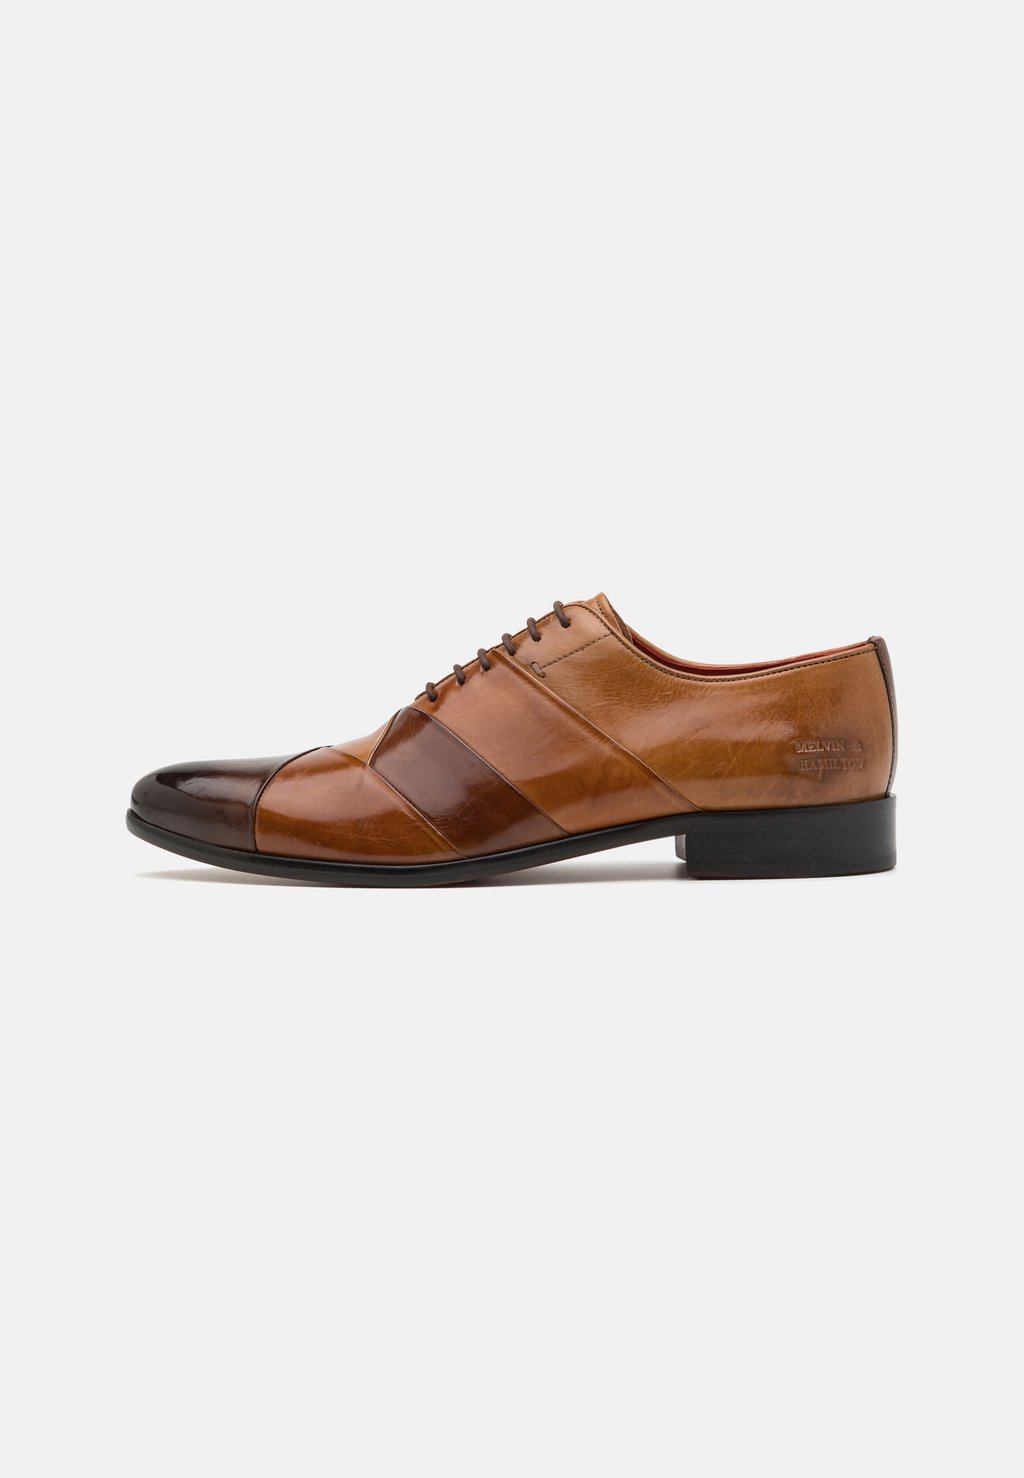 Элегантные туфли на шнуровке Toni 51 Melvin & Hamilton, цвет mid brown/tan/sand/wood/tan/red/natural/brown